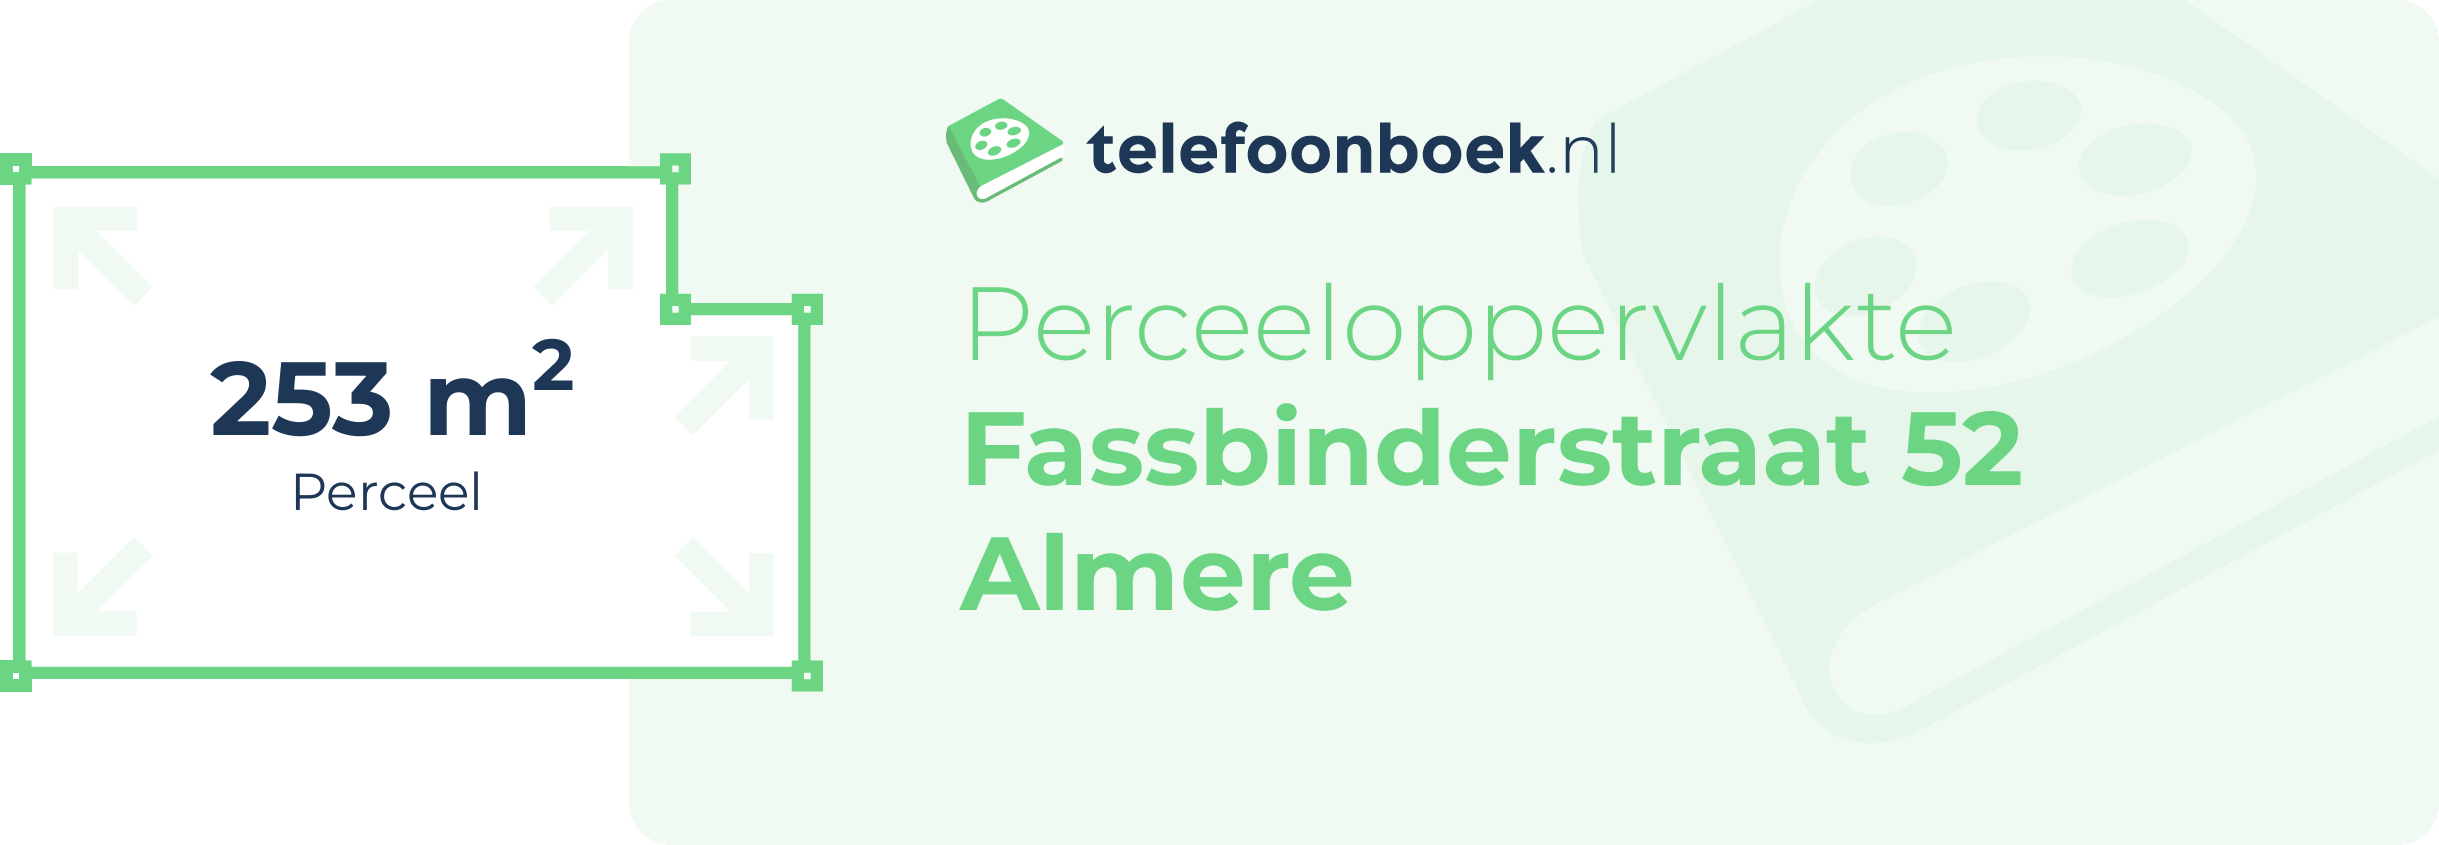 Perceeloppervlakte Fassbinderstraat 52 Almere